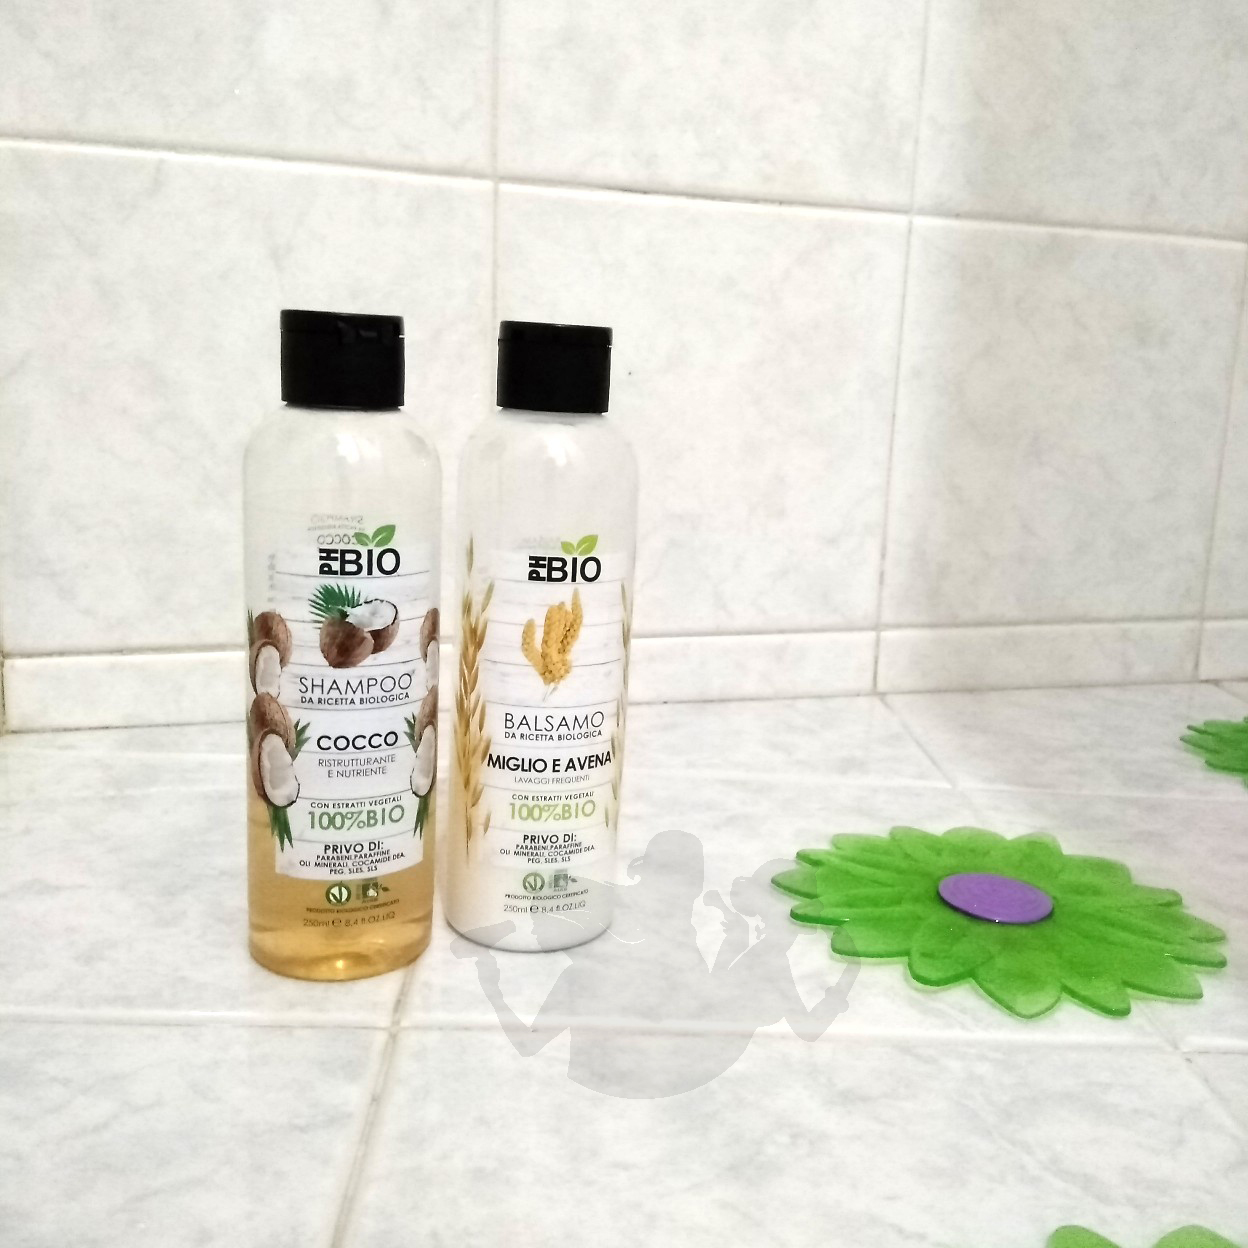 Shampoo e balsamo - PhBio Low Cost